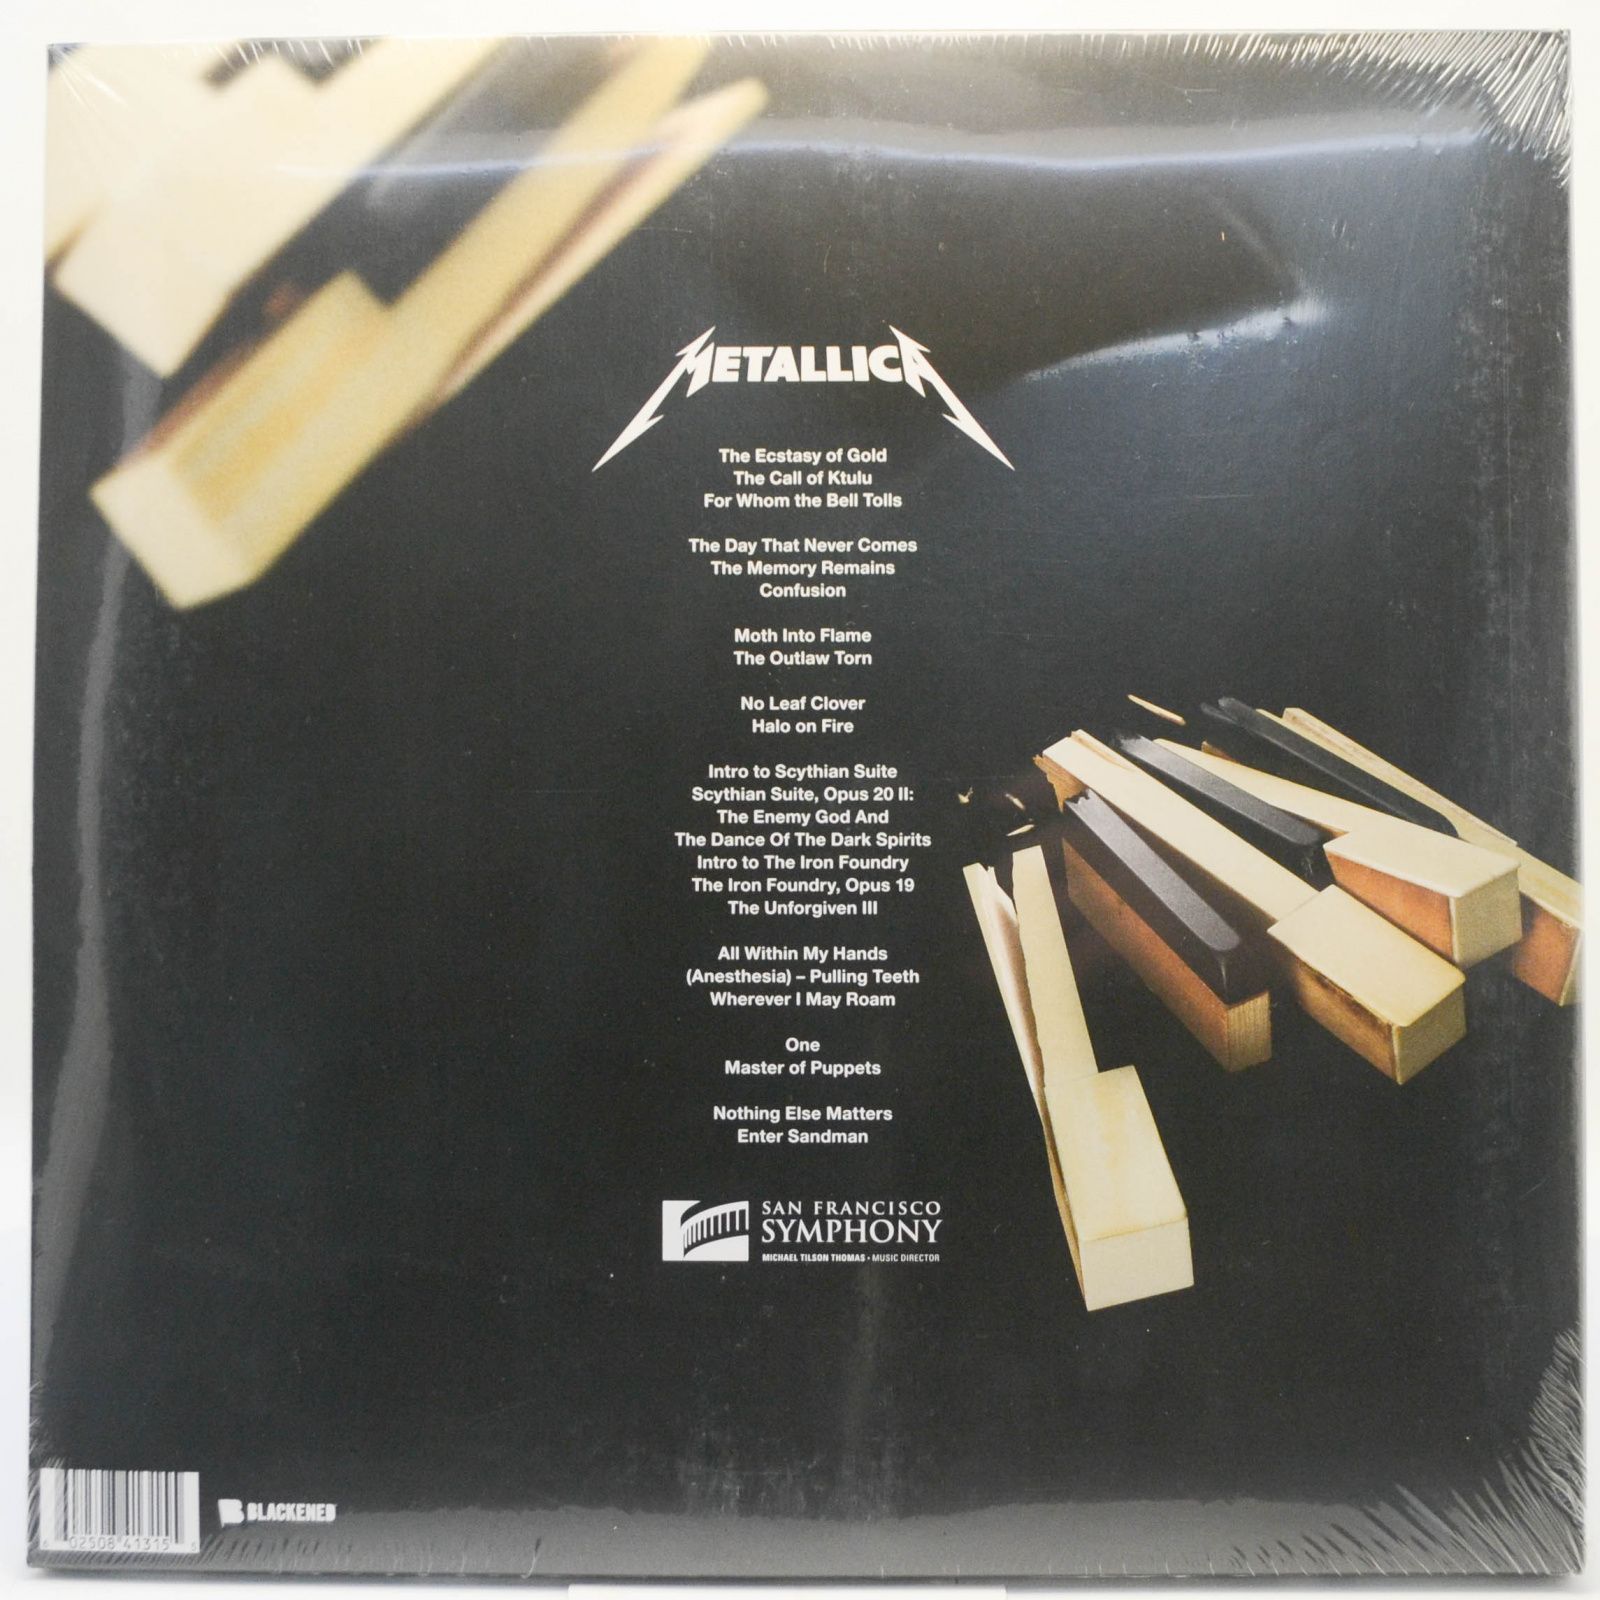 Metallica & San Francisco Symphony — S&M2 (4LP), 2020